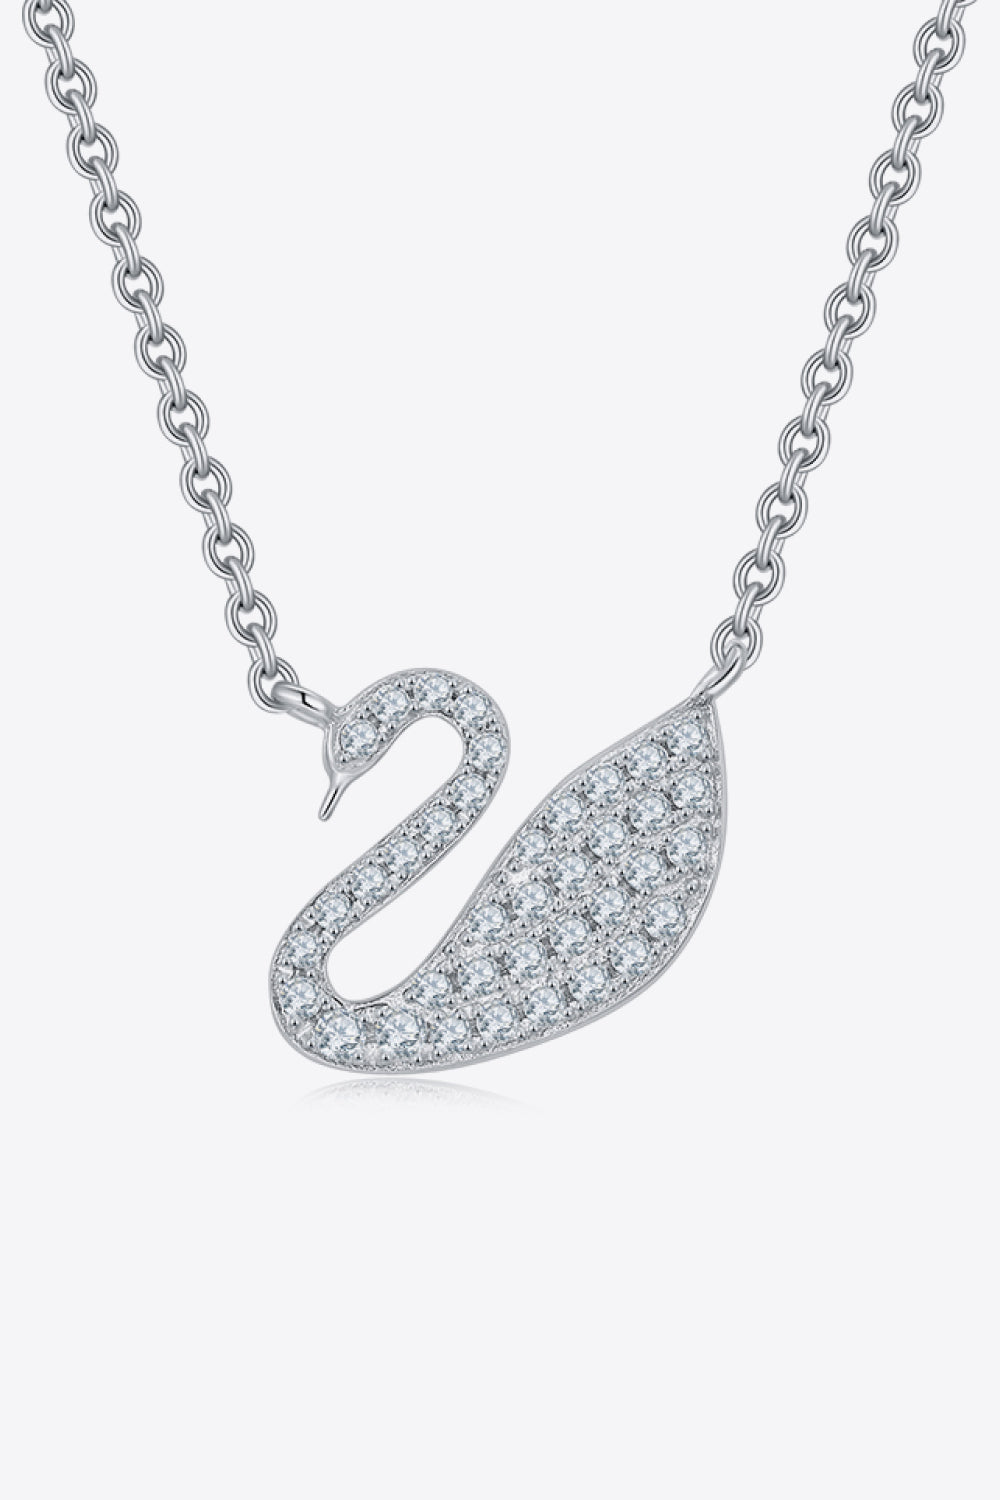 Moissanite Swan 925 Sterling Silver Necklace - FunkyPeacockStore (Store description)